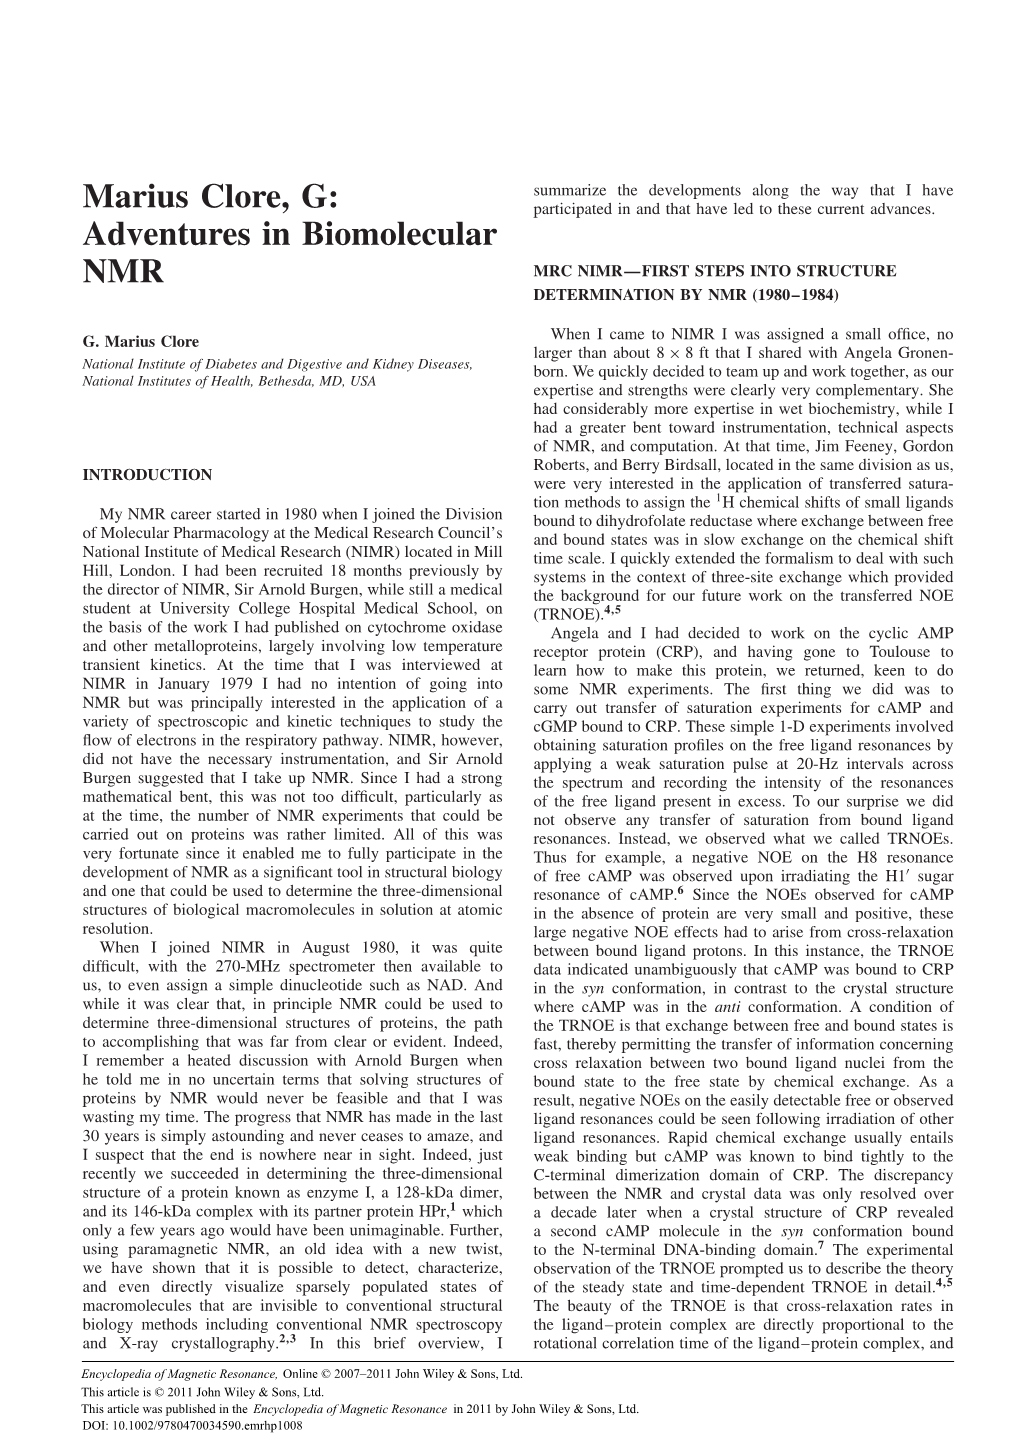 "Marius Clore, G: Adventures in Biomolecular NMR" In